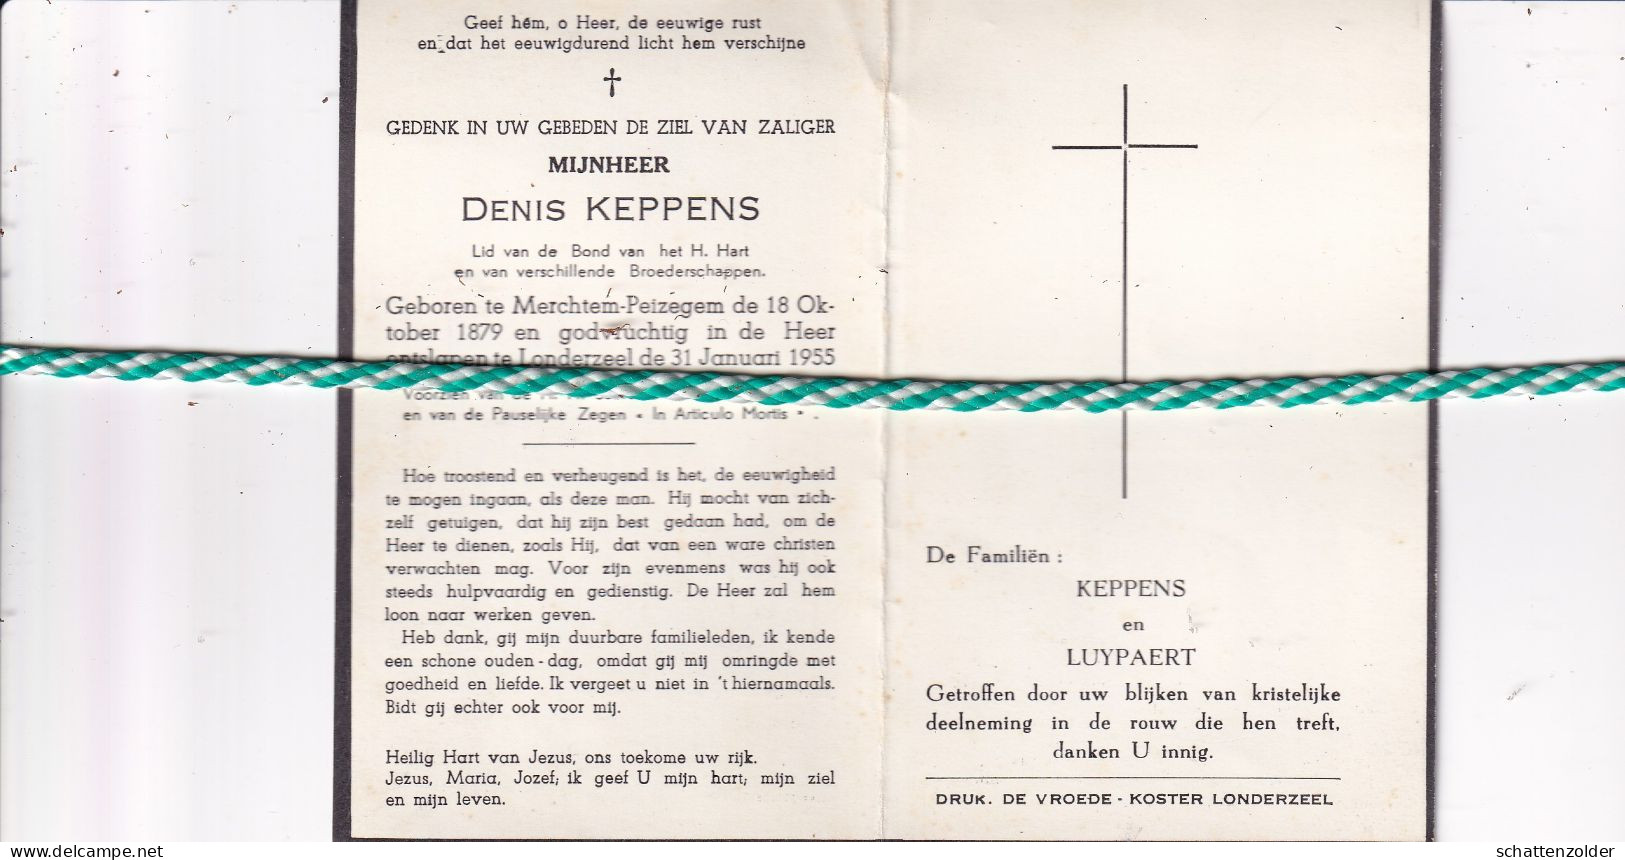 Denis Keppens, Merchtem-Peizegem 1879, Londerzeel 1955 - Obituary Notices